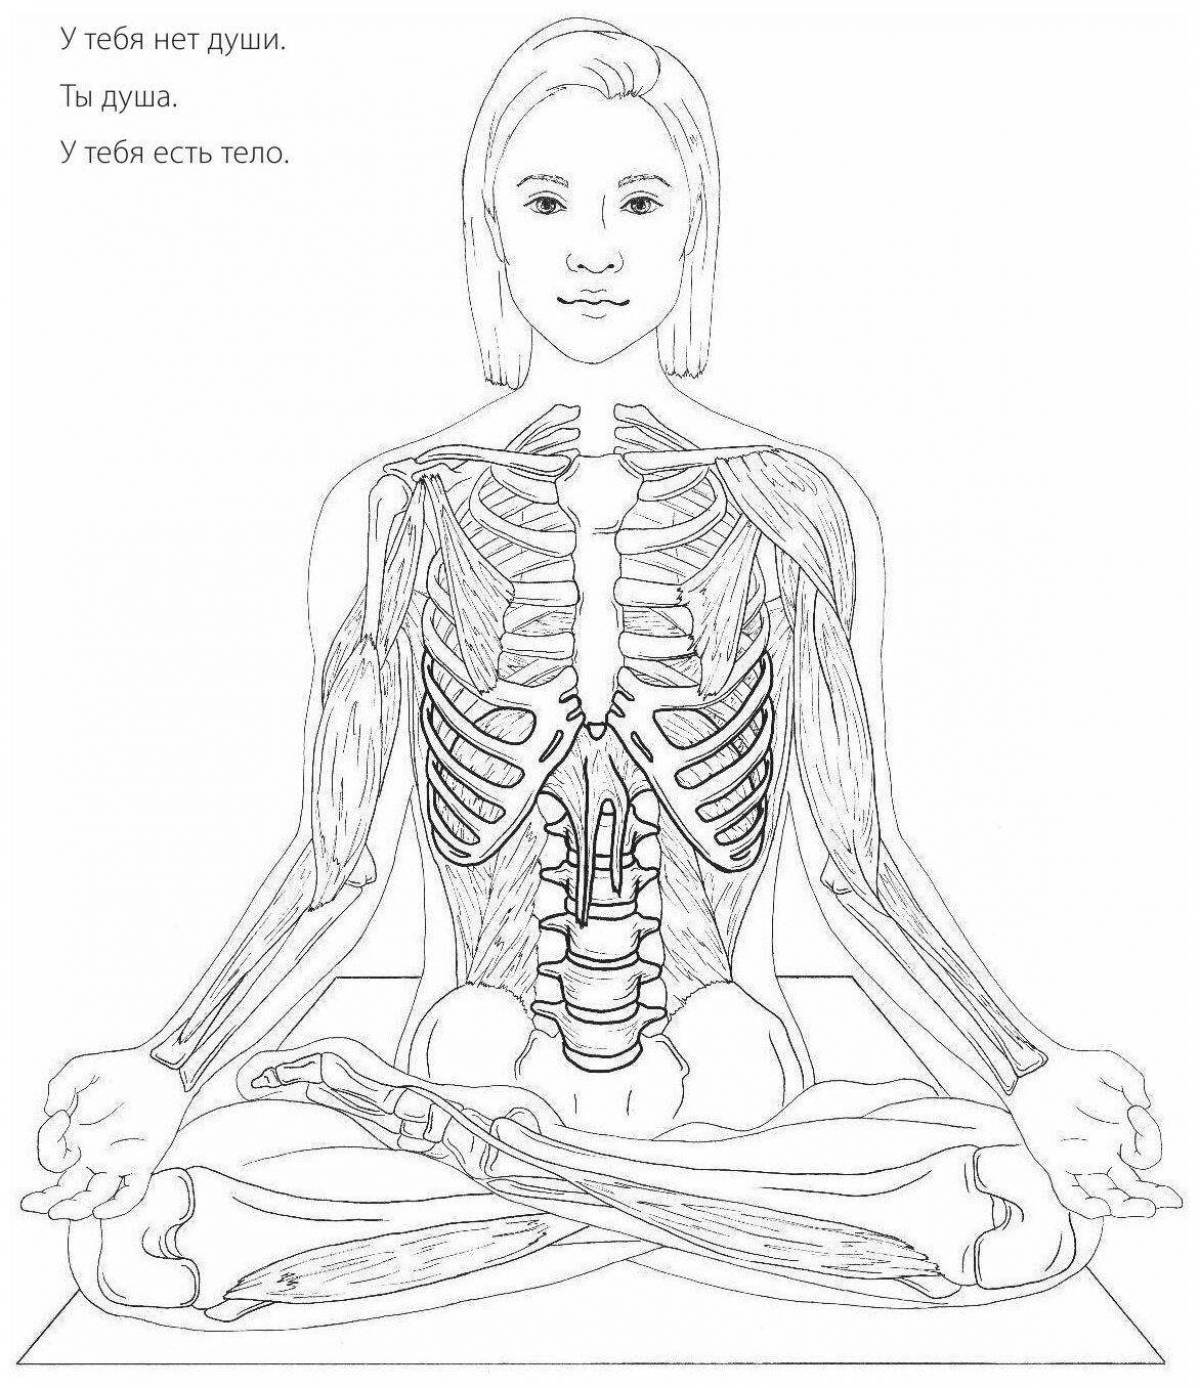 Блестящий атлас анатомии человека pdf